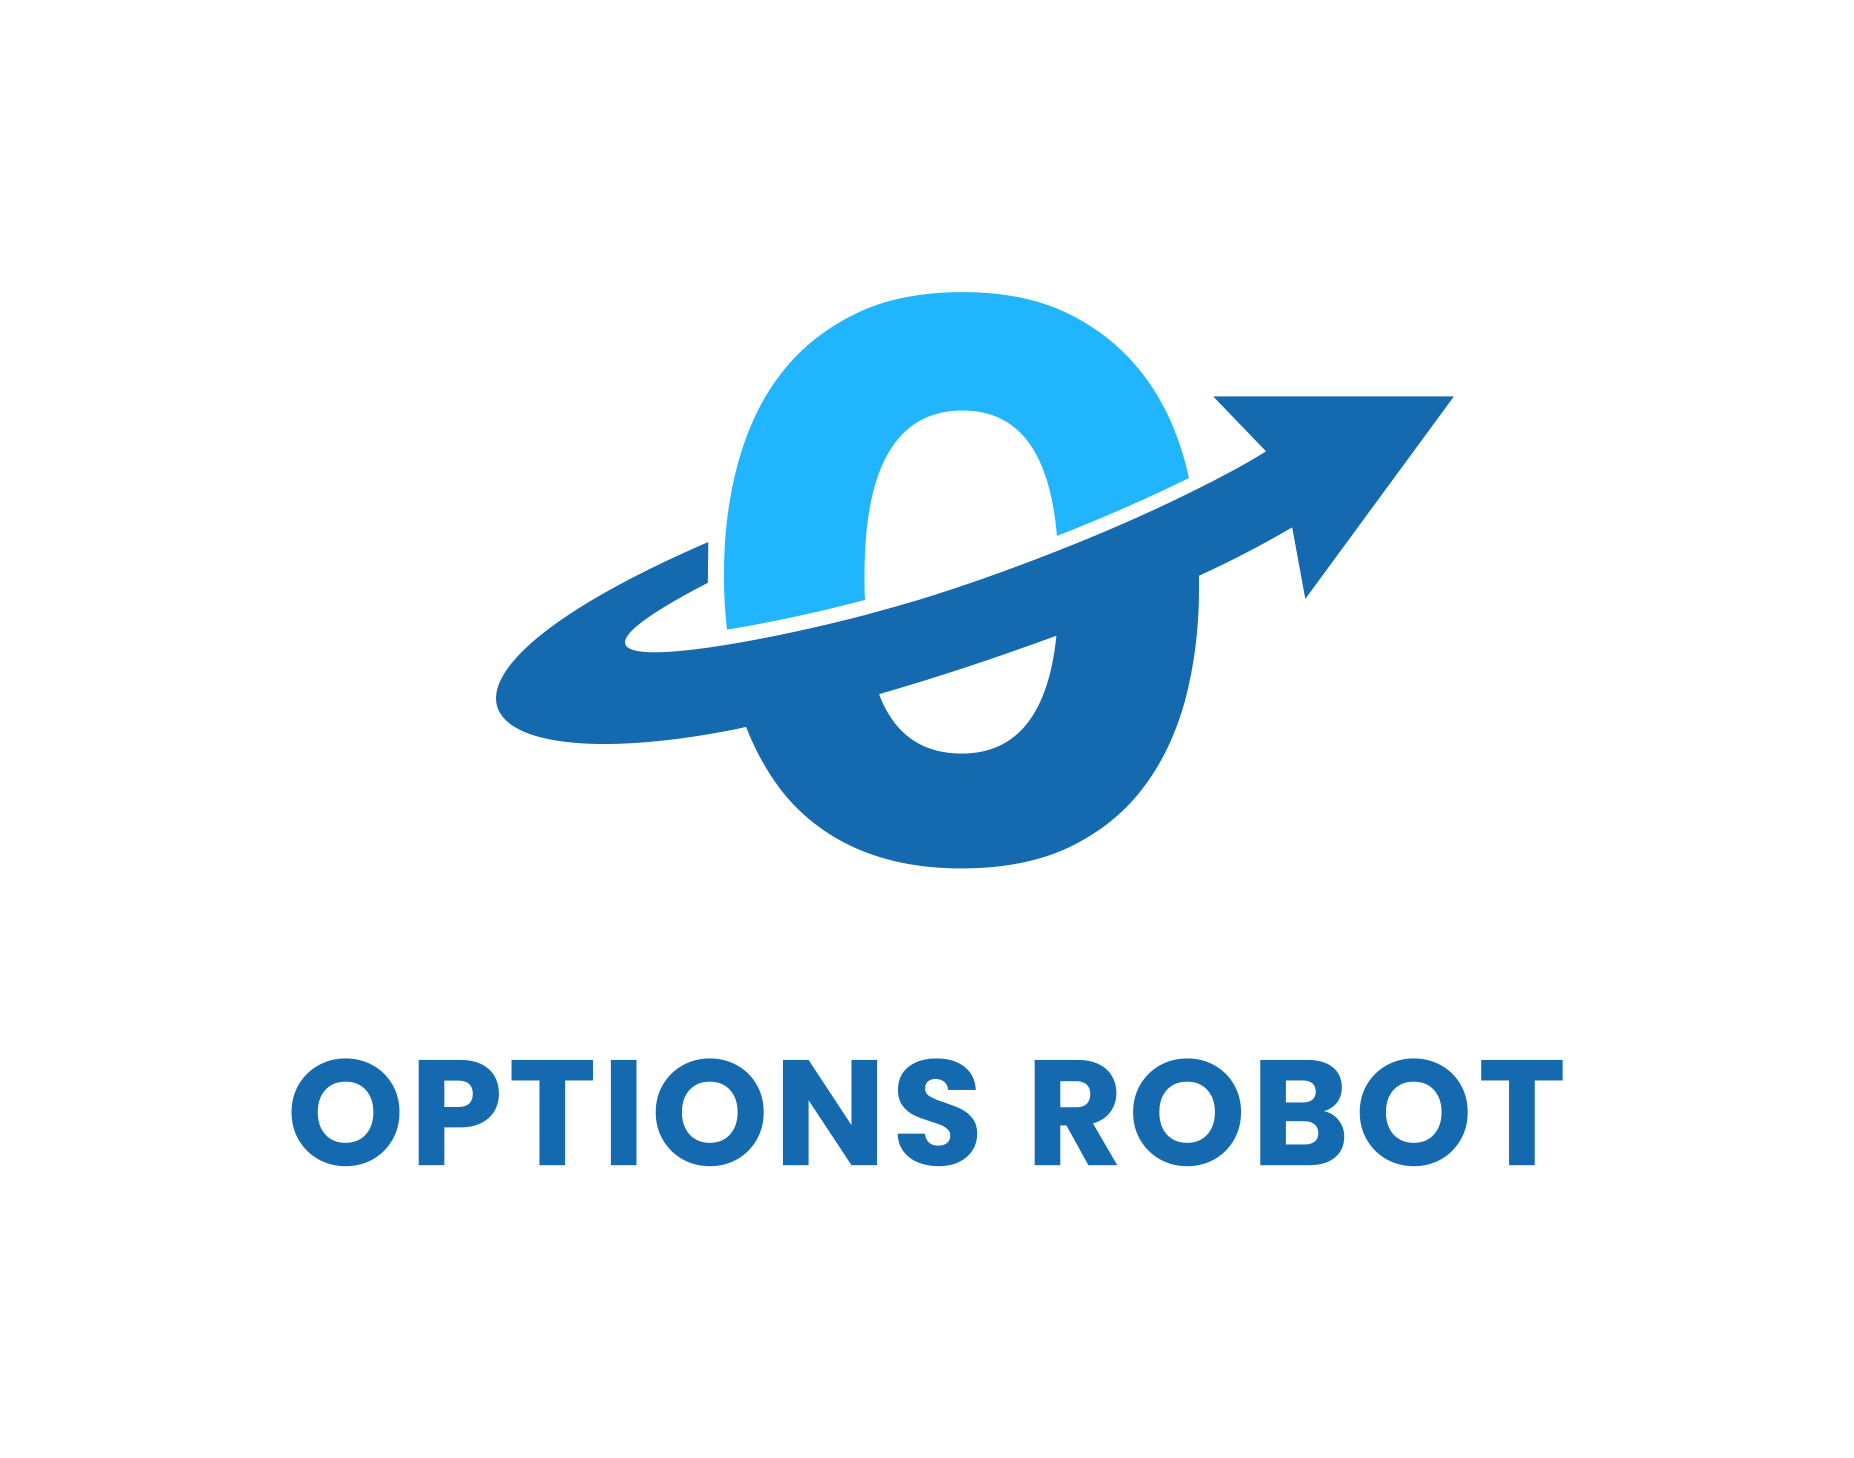 OPTIONS ROBOT